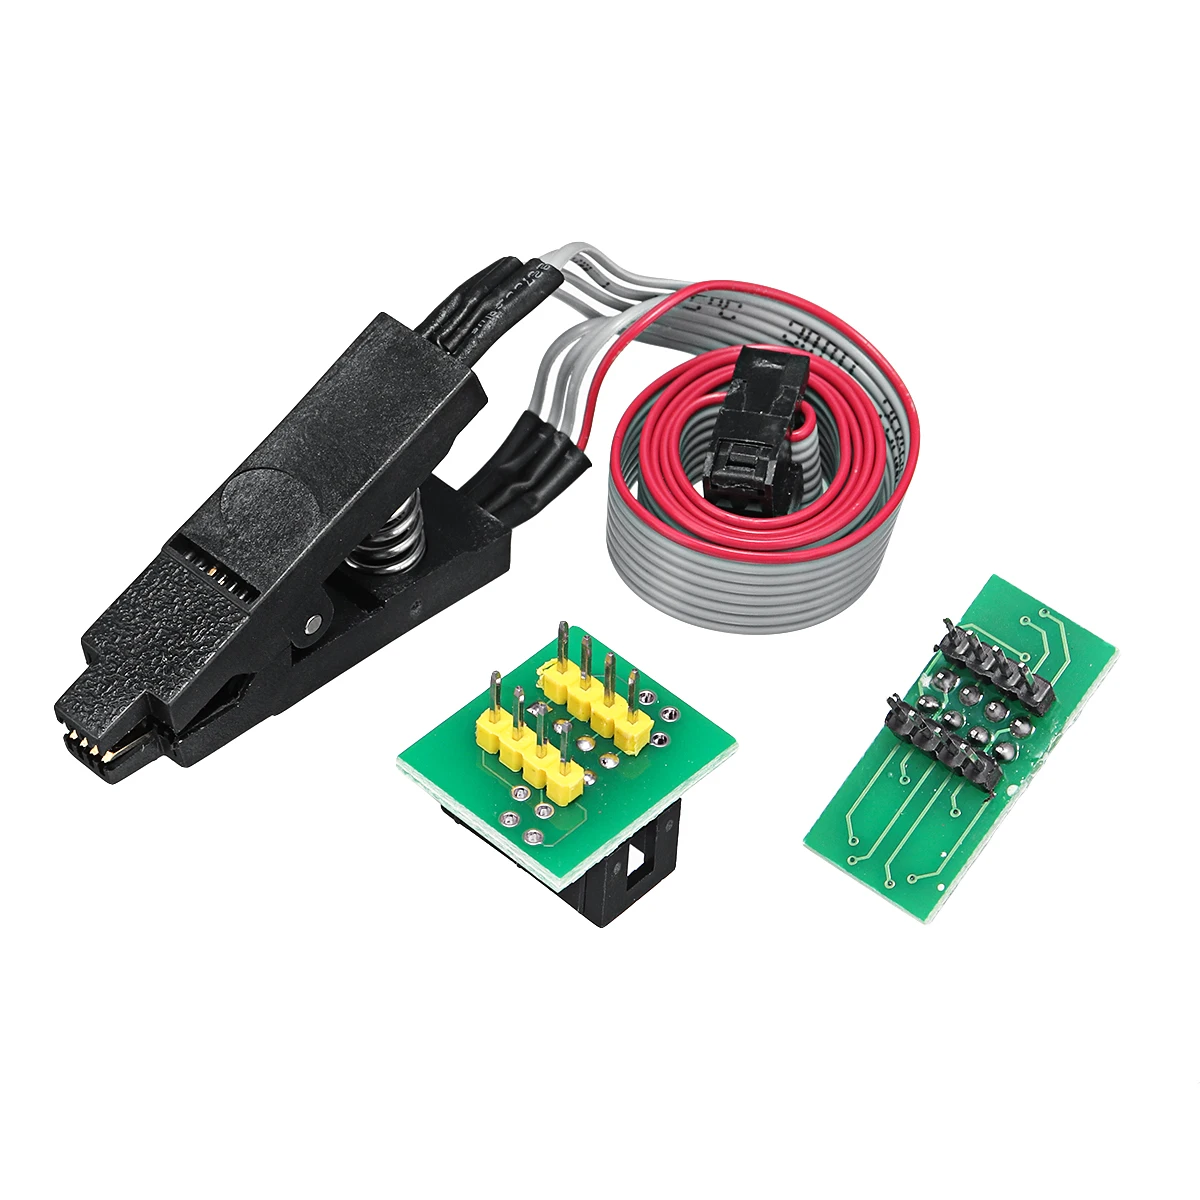 EEPROM USB программатор для флэш-памяти в биос CH341A+ зажим SOIC8+ адаптер 1,8 в+ адаптер SOIC8